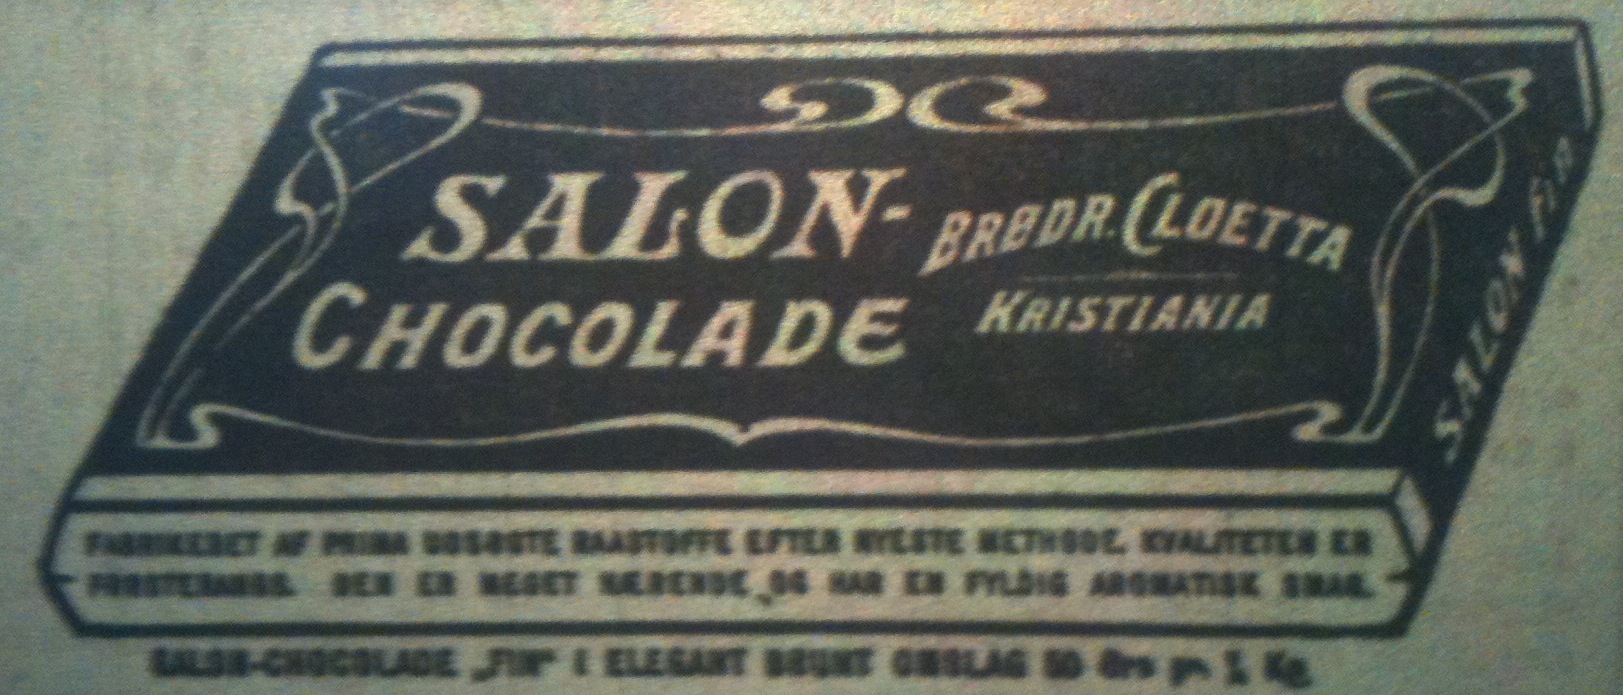 Cloetta salon-chokolade